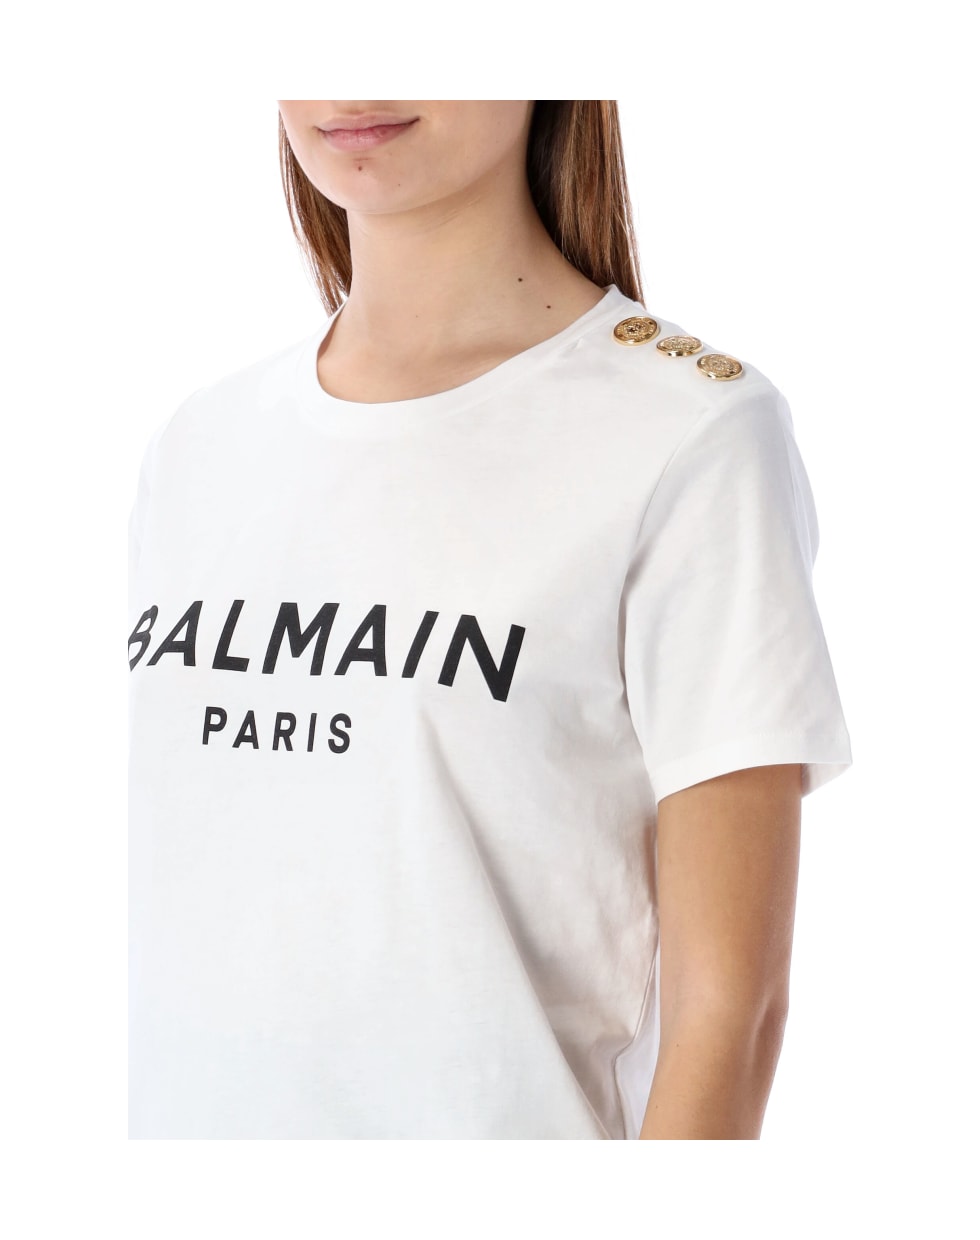 Balmain Logo Print T-shirt - WHITE BLACK